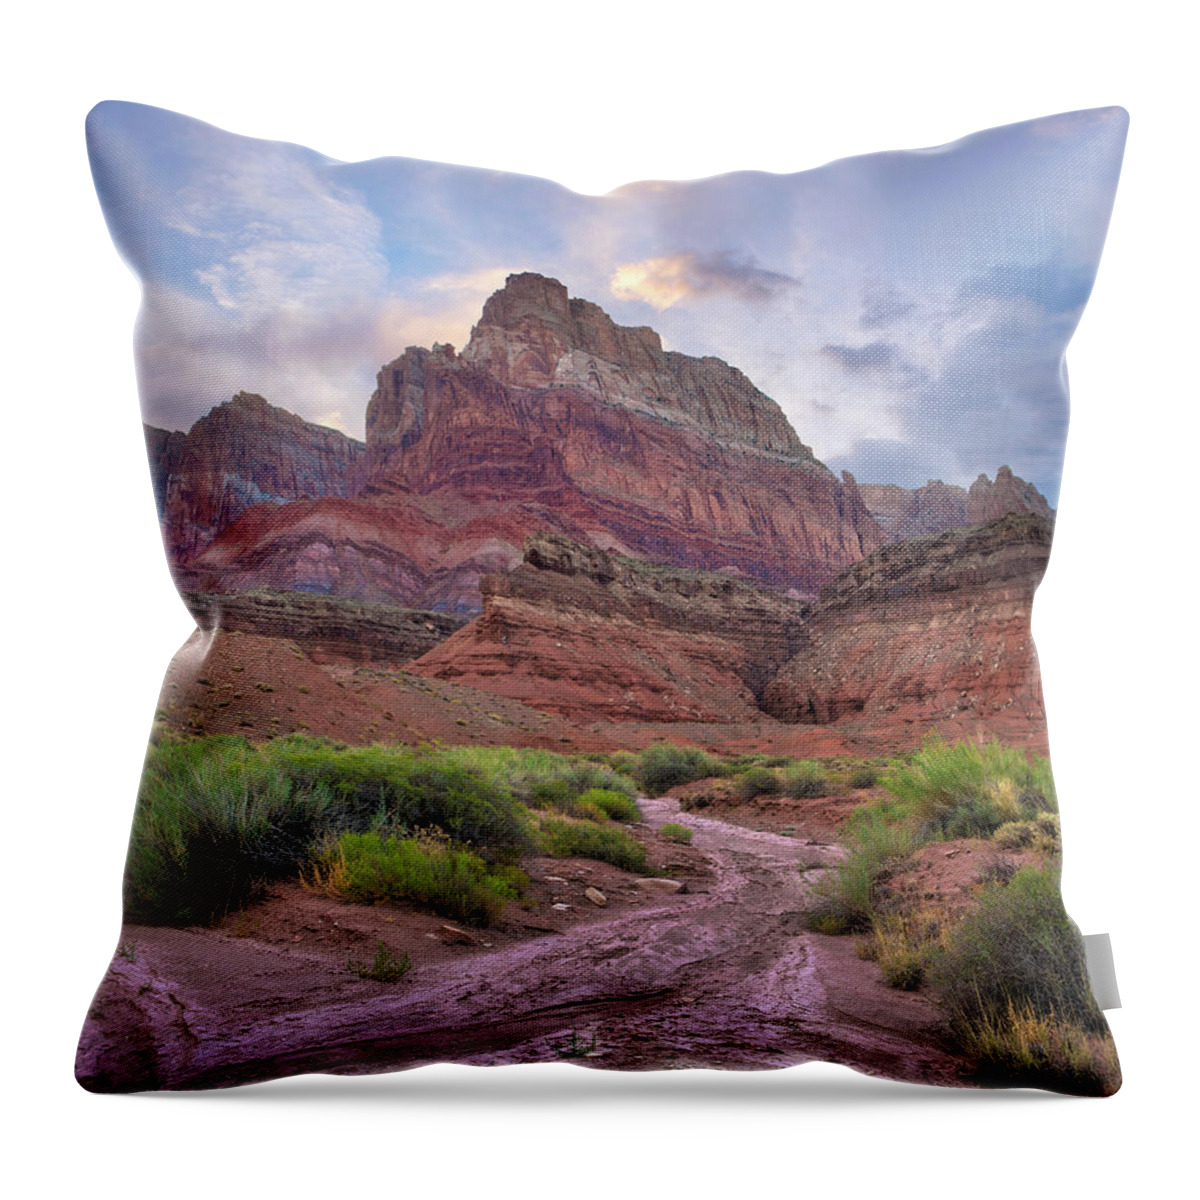 00574850 Throw Pillow featuring the photograph Desert And Cliffs, Vermilion Cliffs by Tim Fitzharris